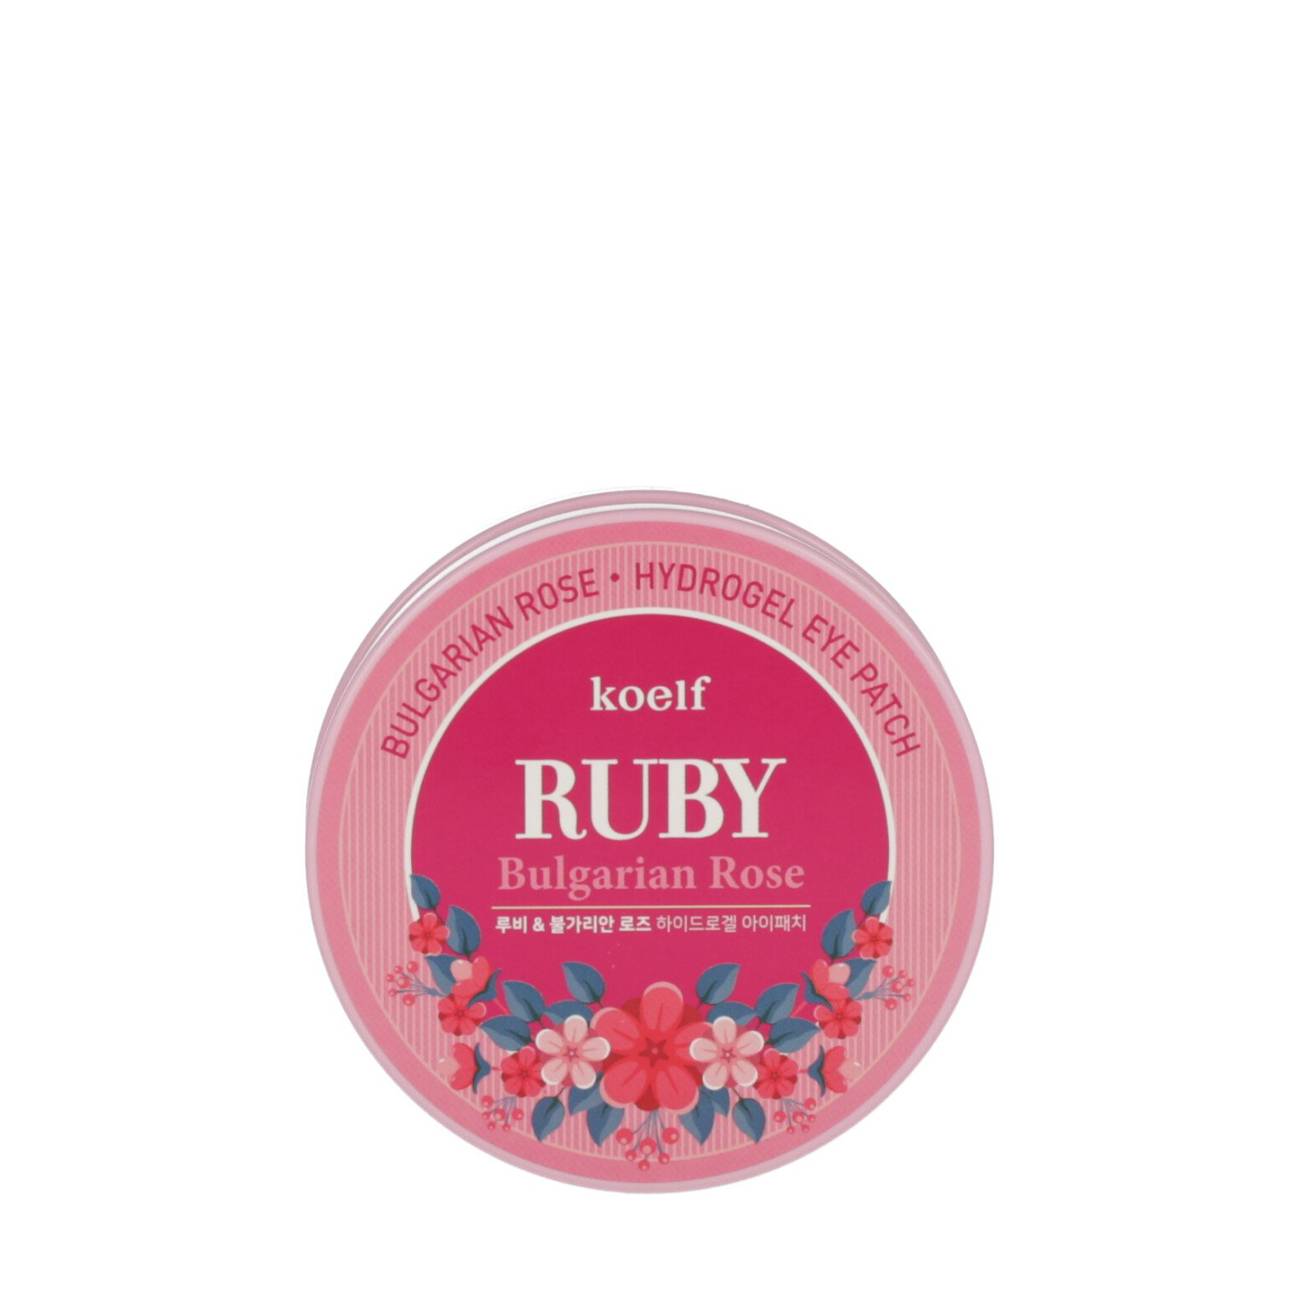 Ruby & Bulgarian Rose Eye Patch – 60 Pieces